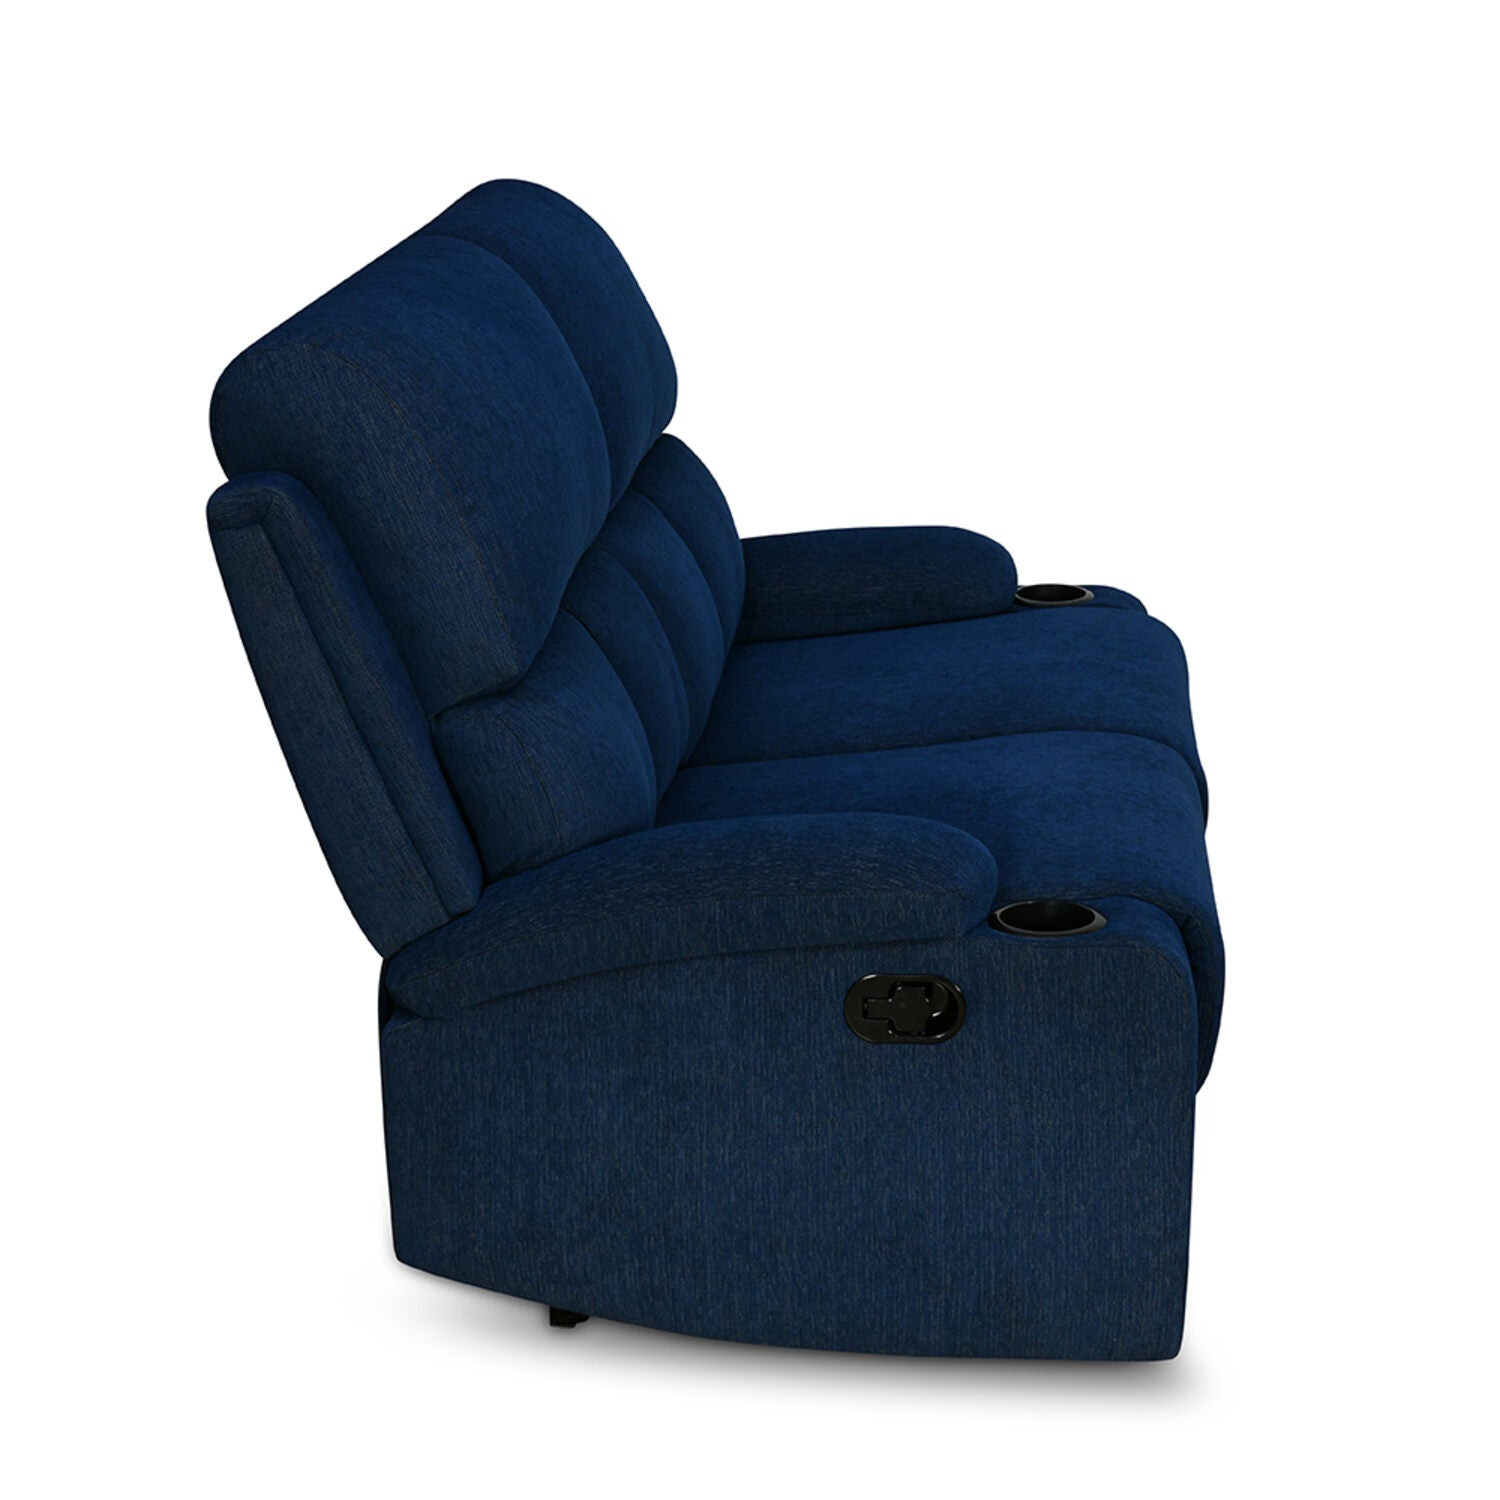 Matt 2 Seater Recliner Sofa with Cup Holder (Blue)